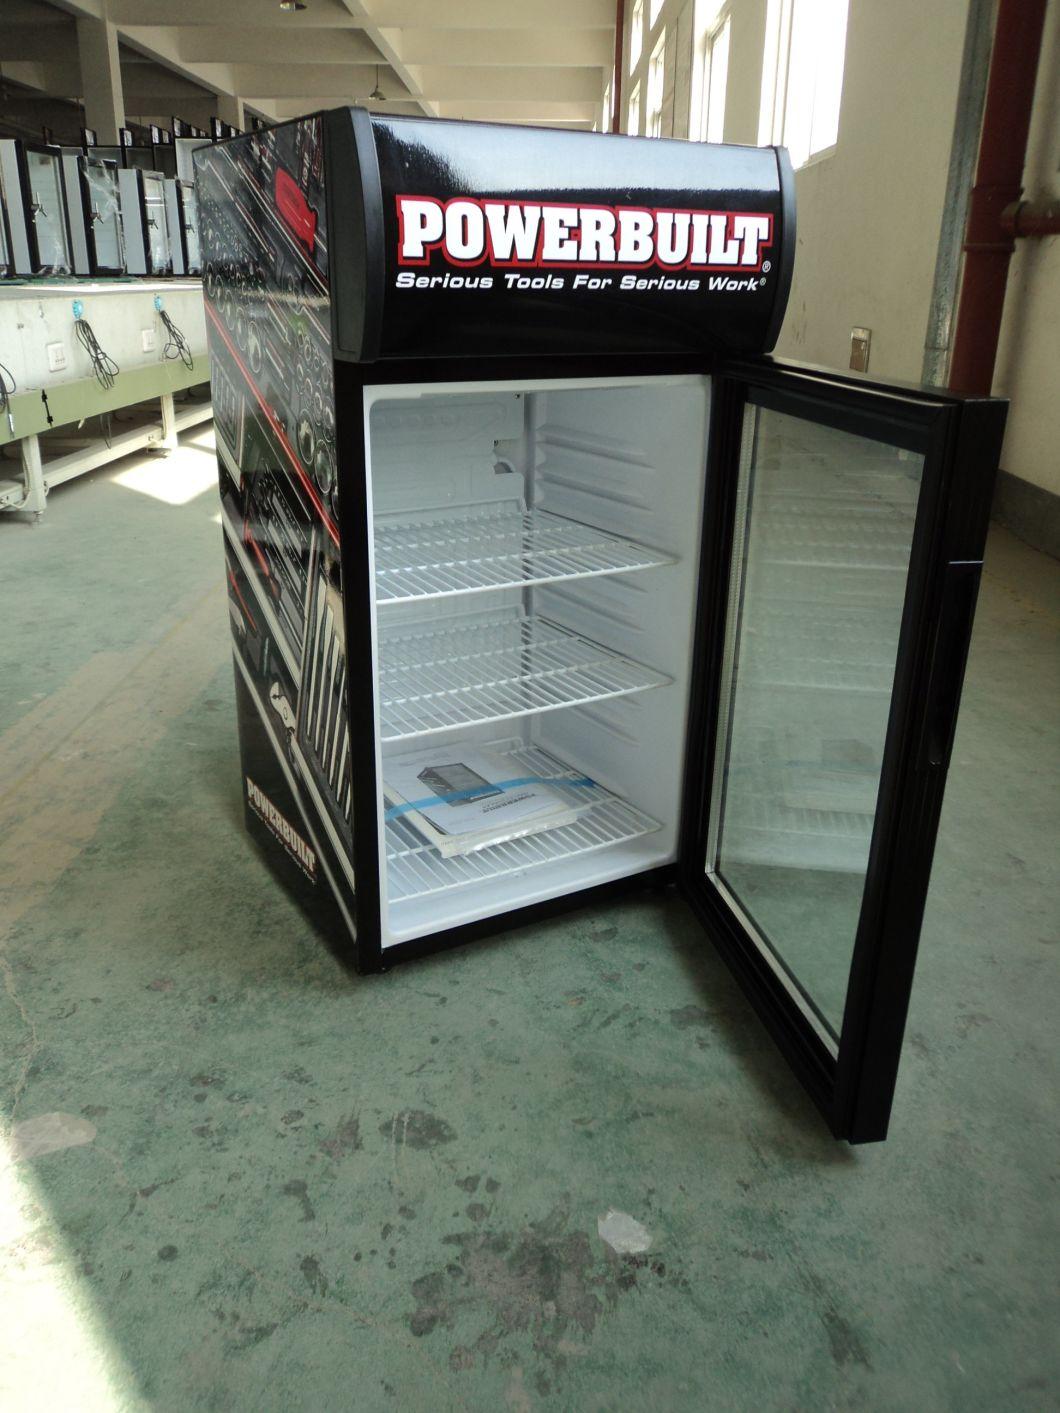 Fan Cooling Upright Glass Door Beverage Supermarket Showcase (SC80B)